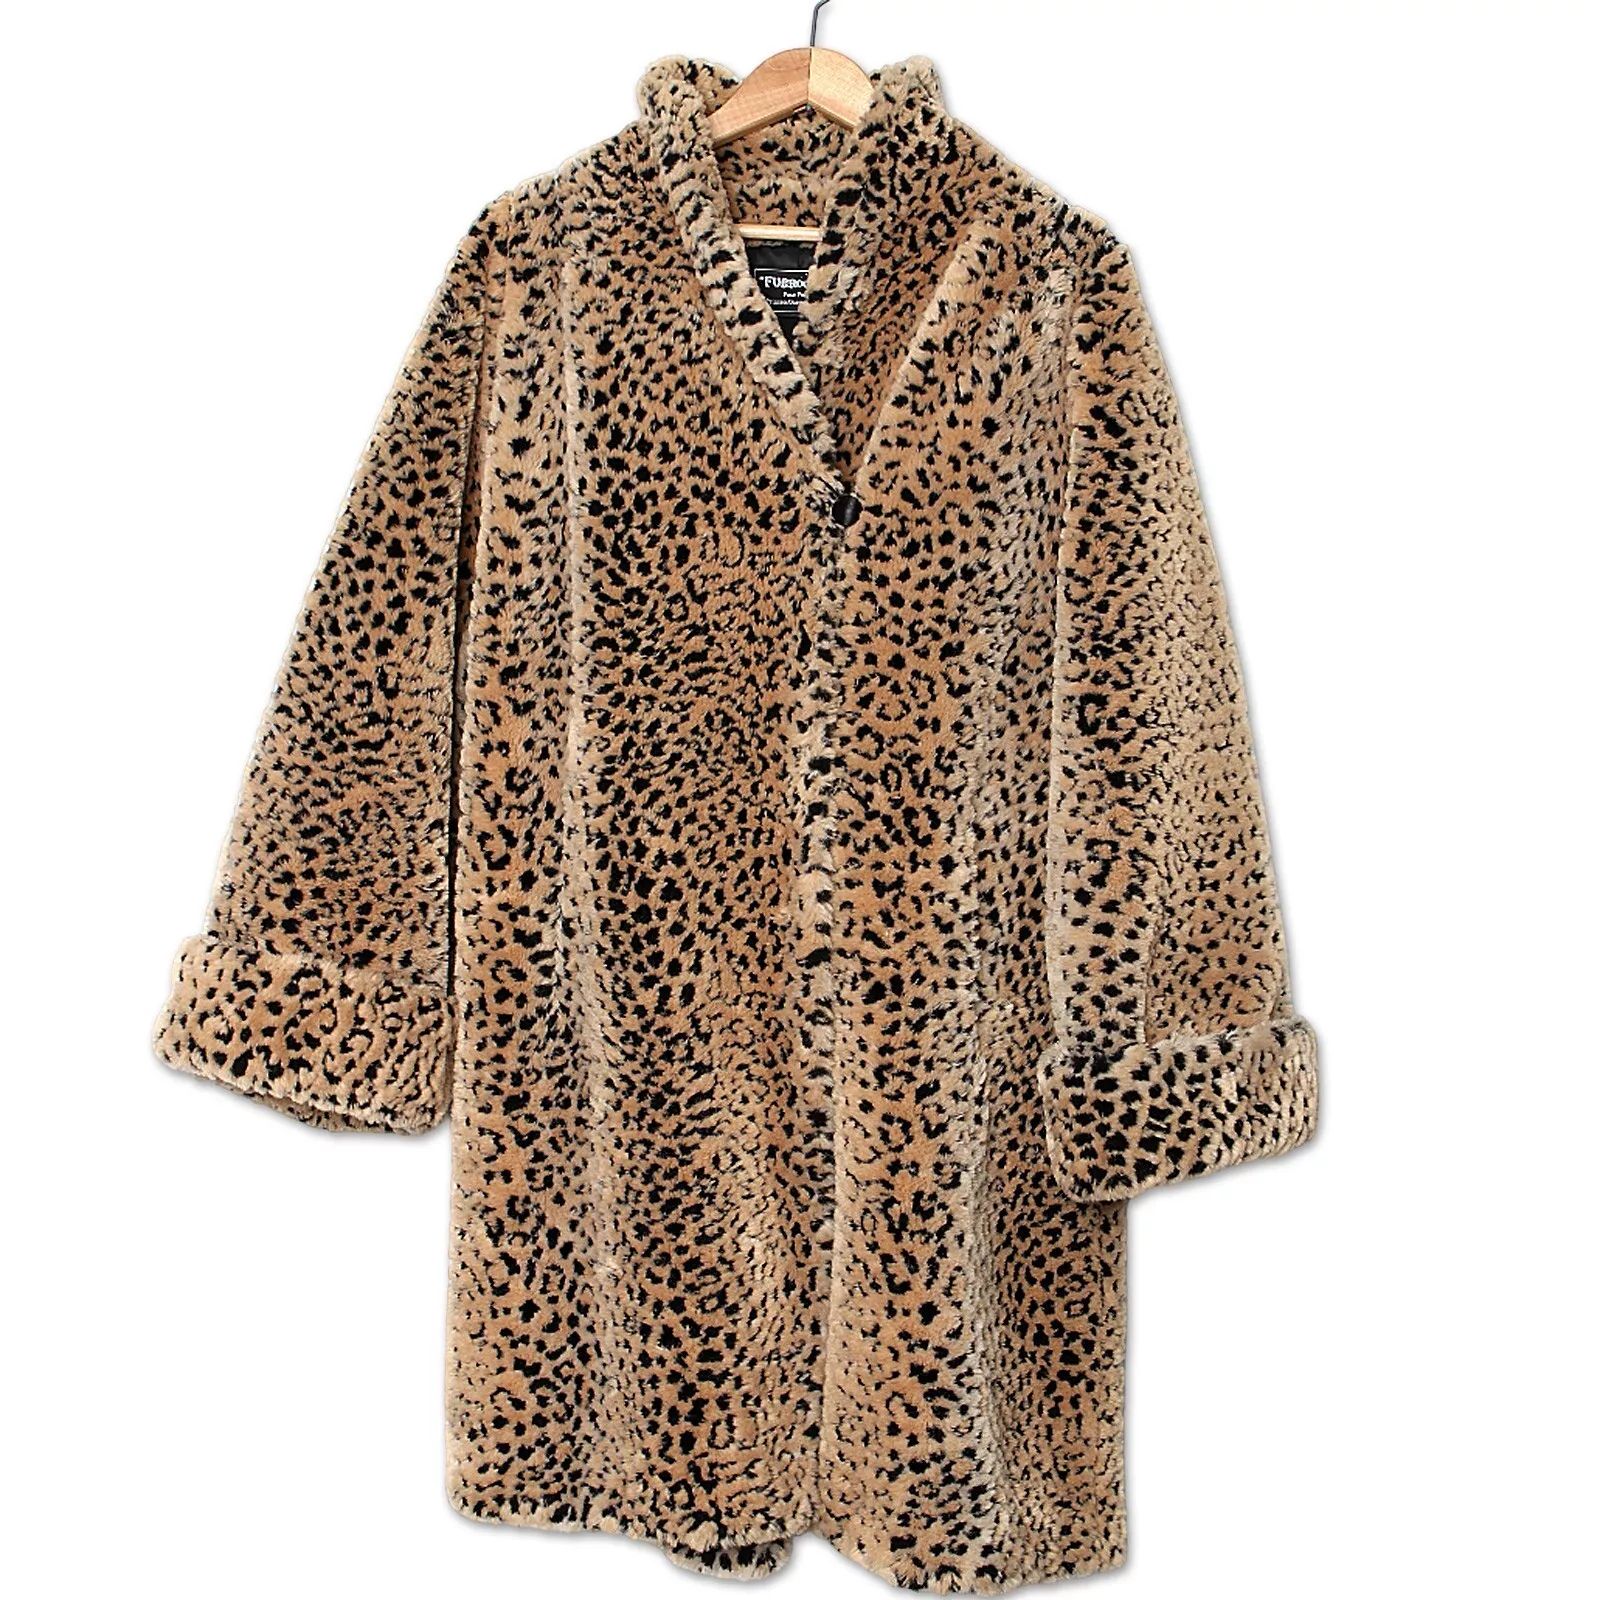 VTG Furrocious Faux Fur Coat Leopard Print Jacket 80s Mob Wife Cosplay Tan S/M/L | eBay CA